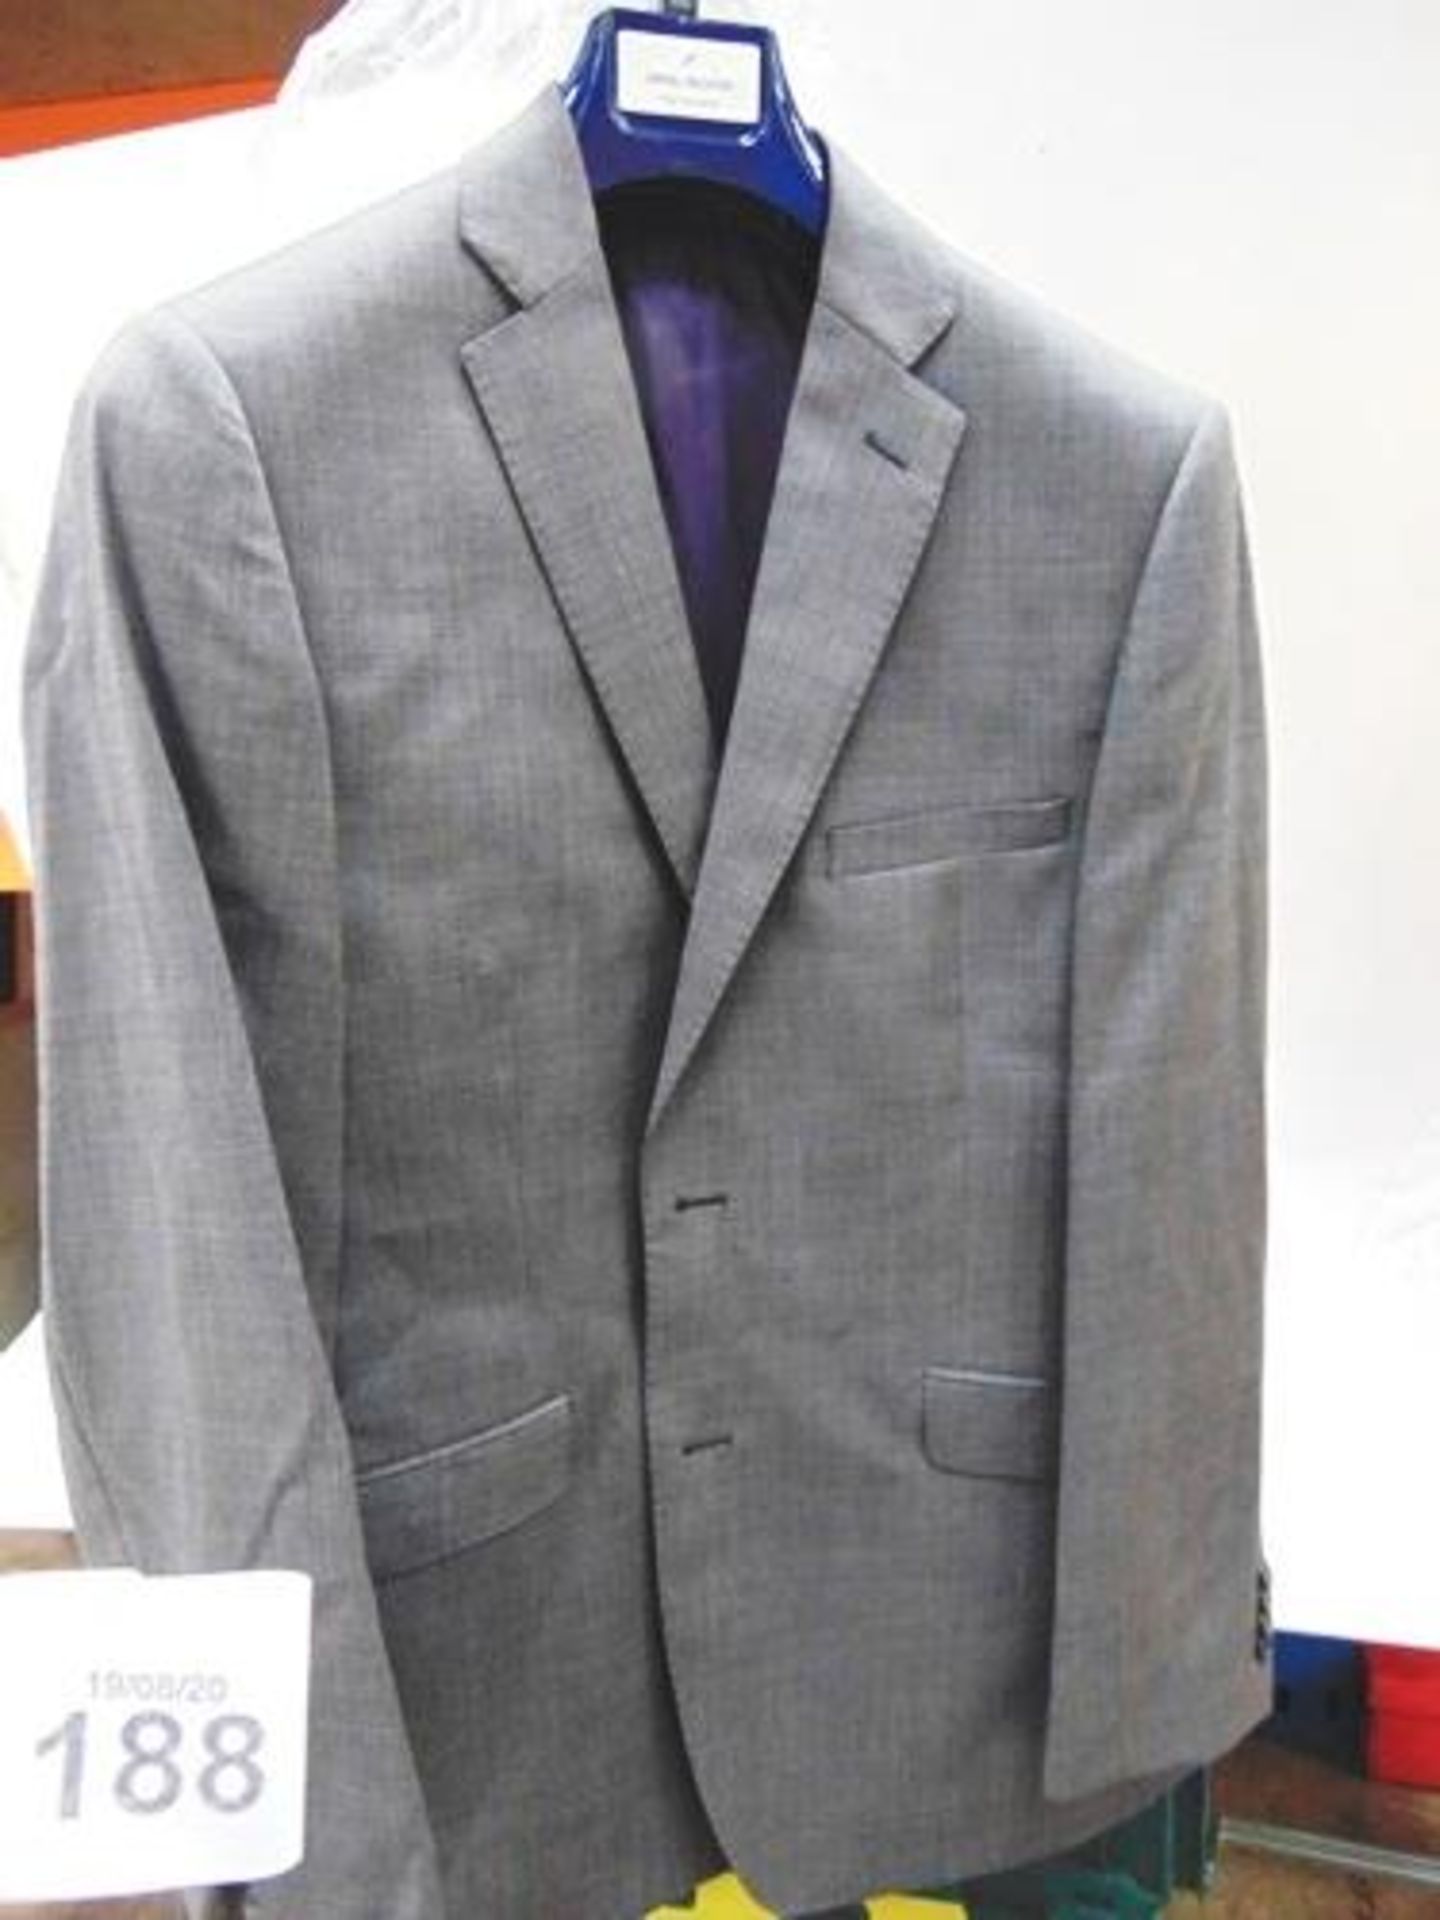 5 x Daniel Hechter travel suits, grey birdseye colour, 2 x size 40S, 1 x size 40R, 1 x size 40L - Image 2 of 3